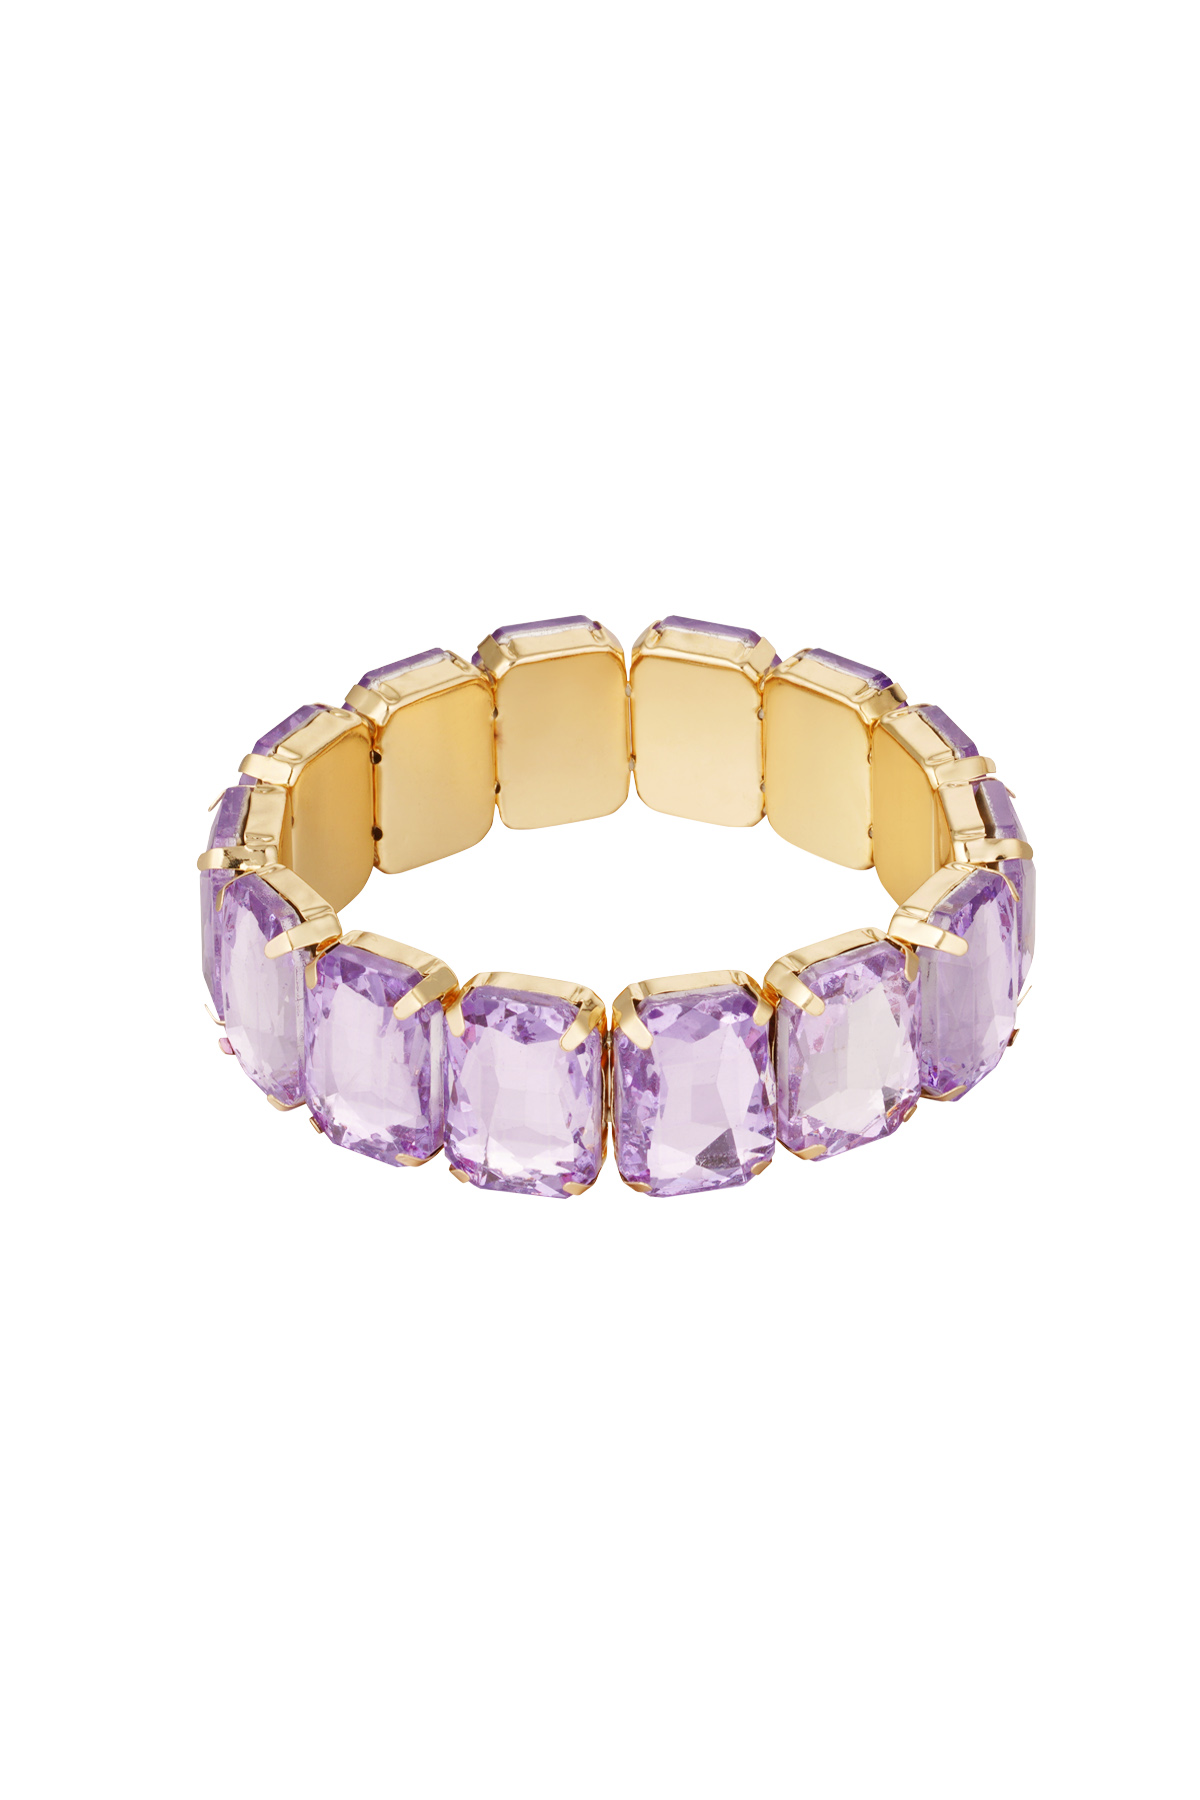 Slave bracelet large stones - gold/lilac h5 